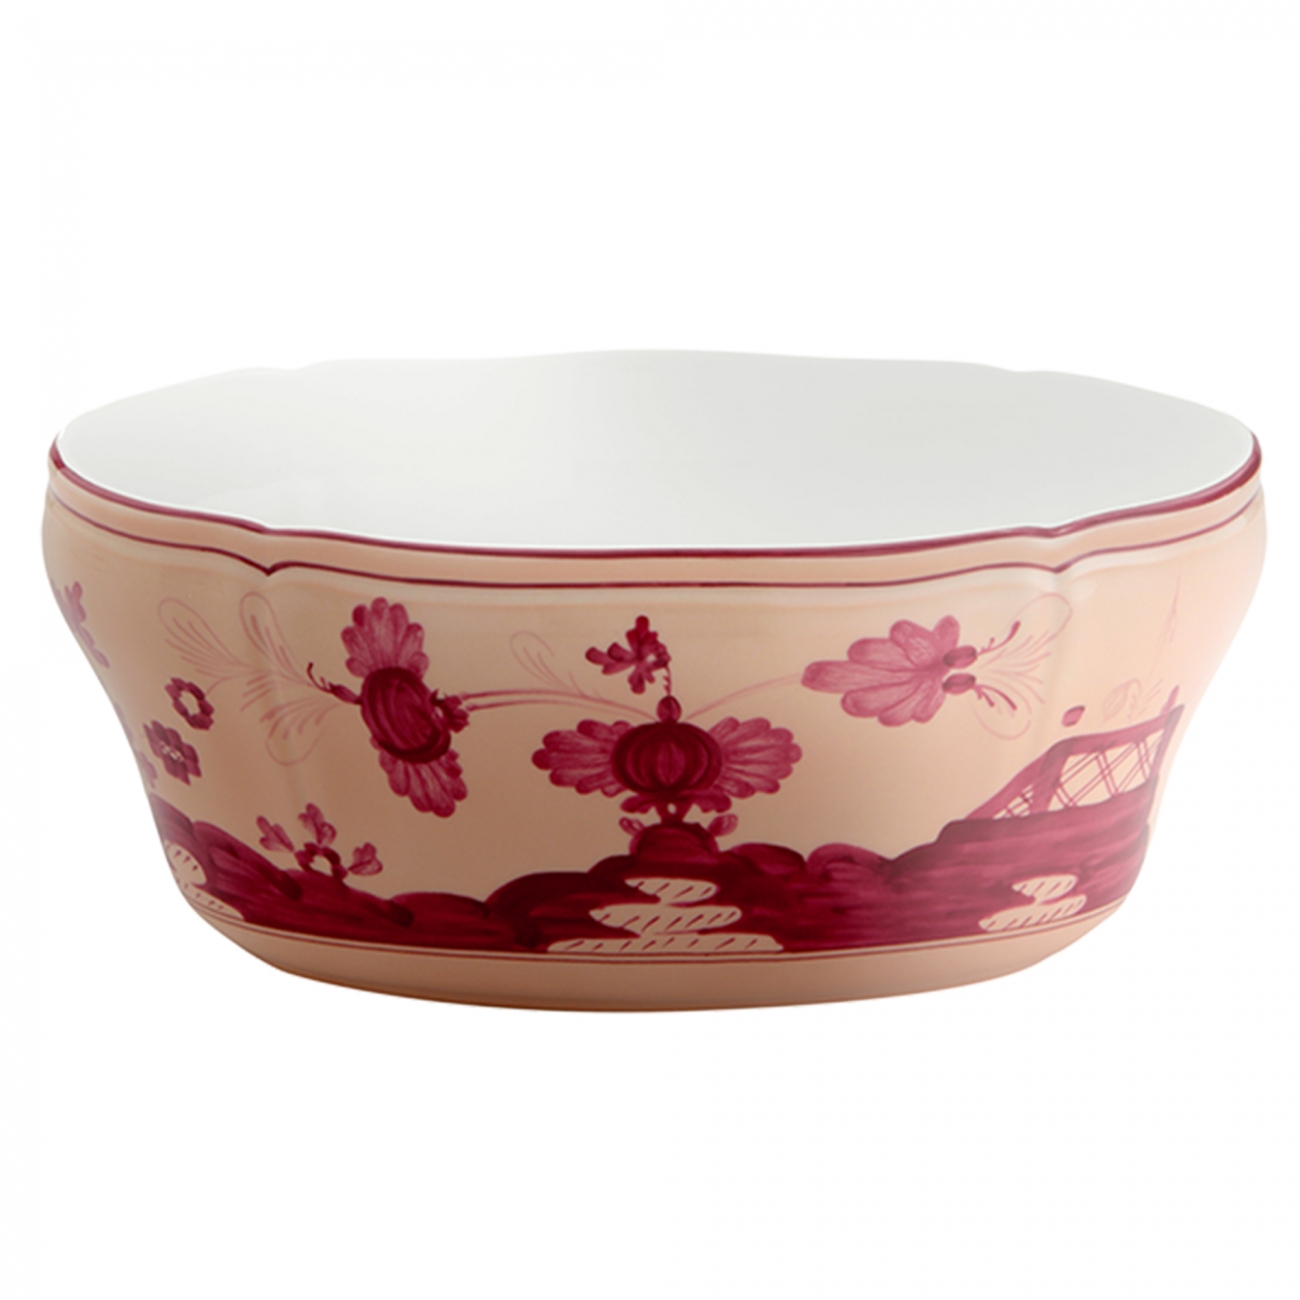 Ginori 1735 Oriente Italiano Oval salad bowl